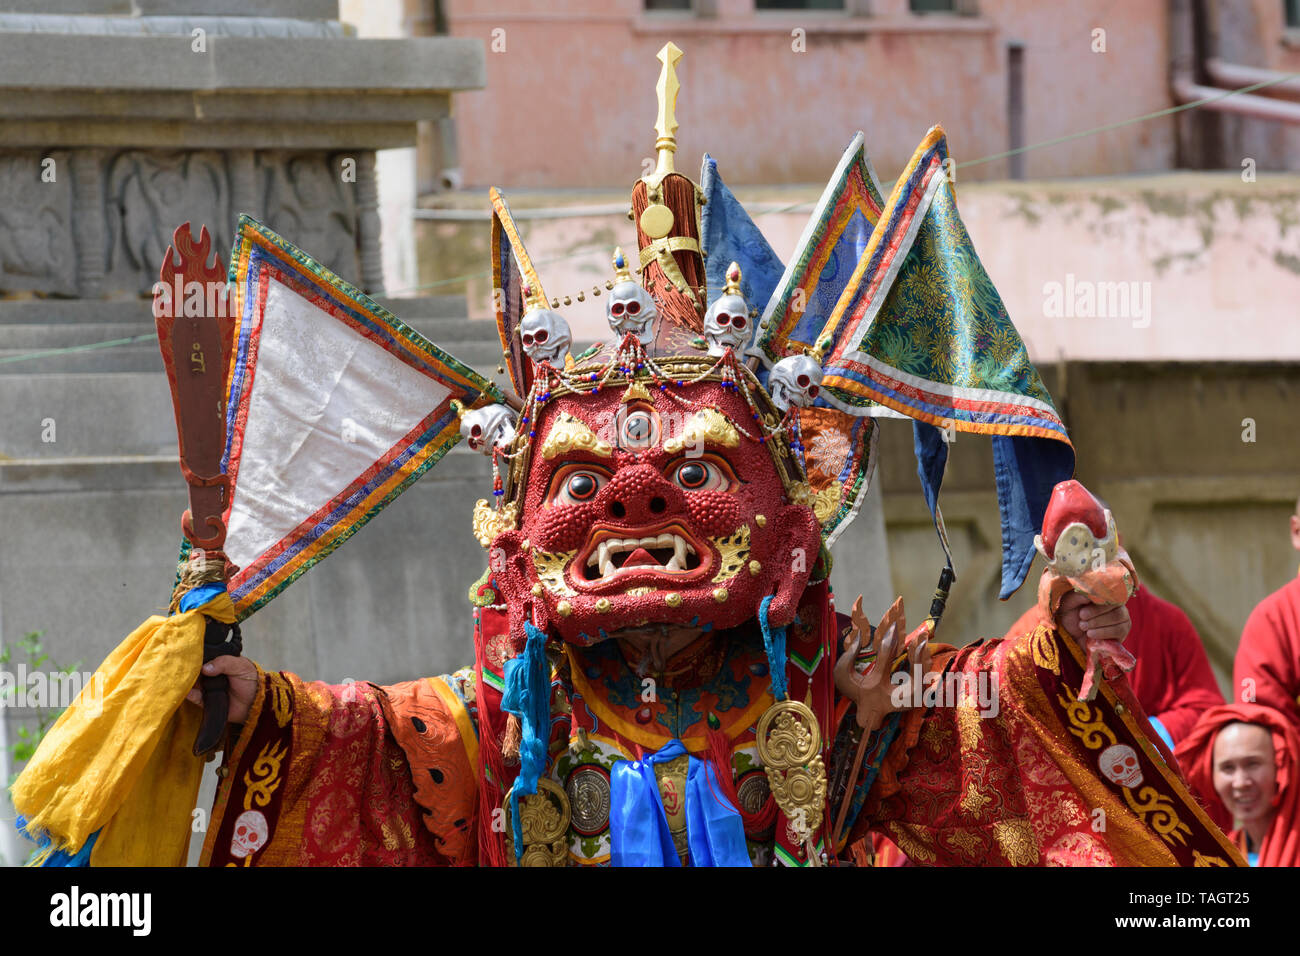 Tsam (Cham) religione mask dance nel monastero Dashchoilin, Ulaanbaatar, in Mongolia. Dshamrang (o Jamsrang) il dio della guerra Foto Stock